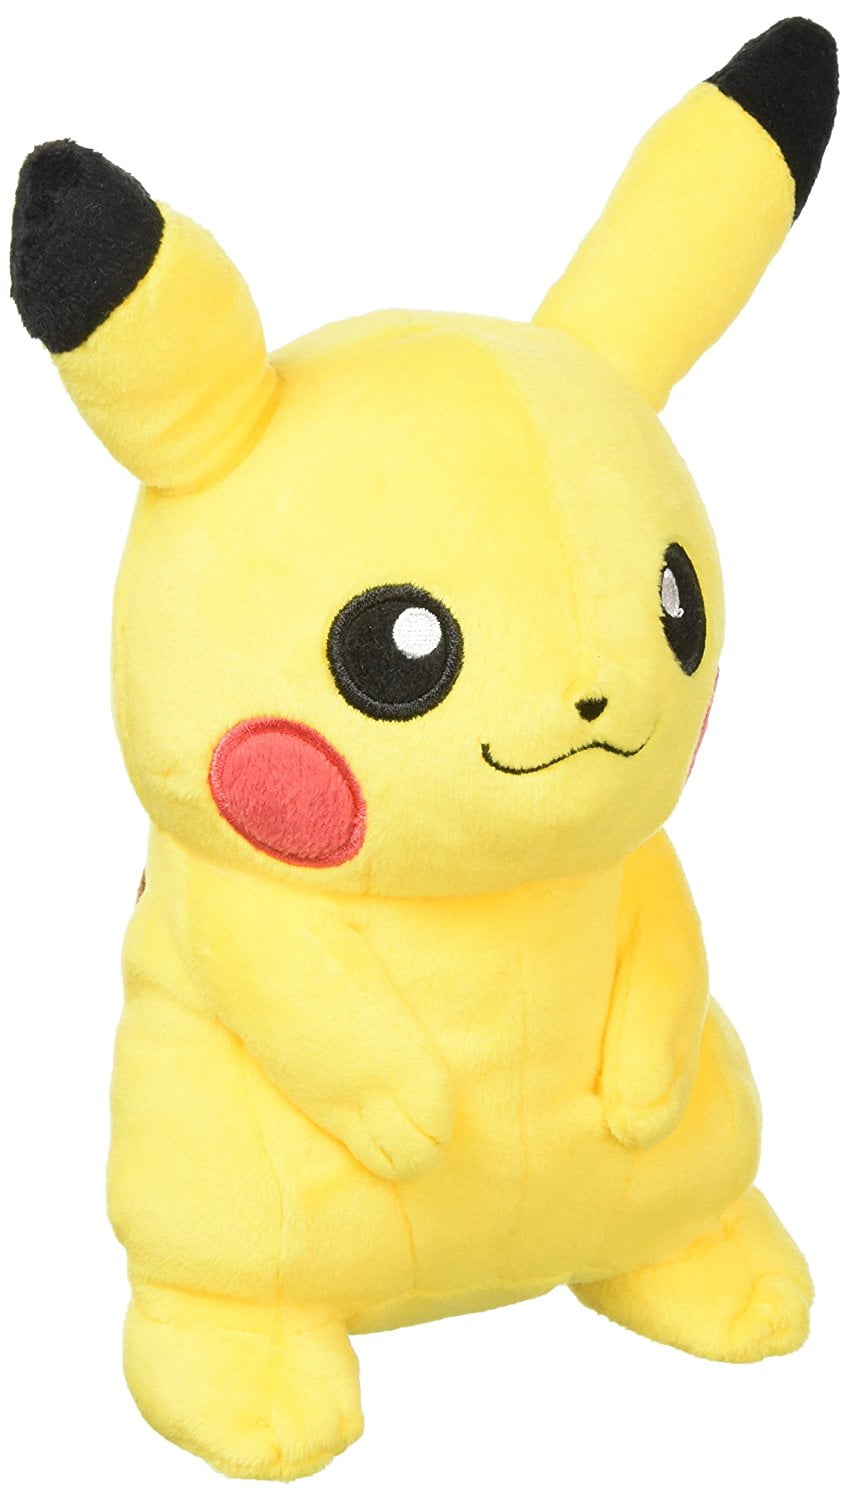 Pikachu Plush 9" Tall